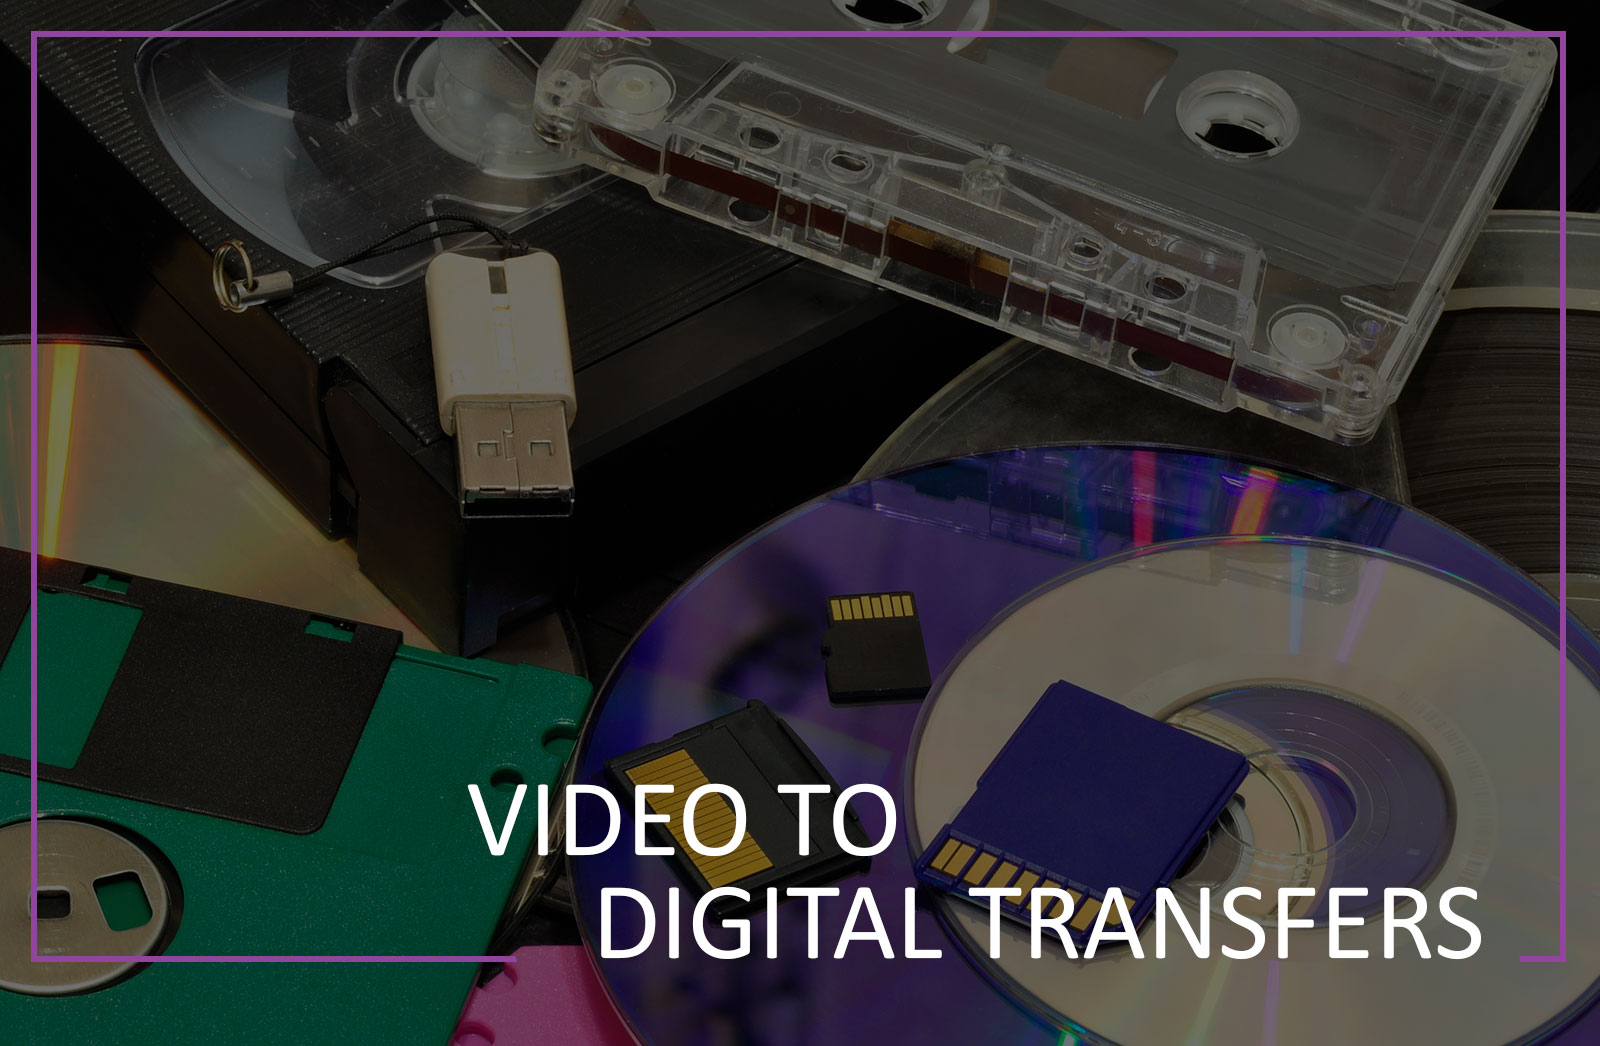 VIDEO TO DIGITAL TRANSFERS